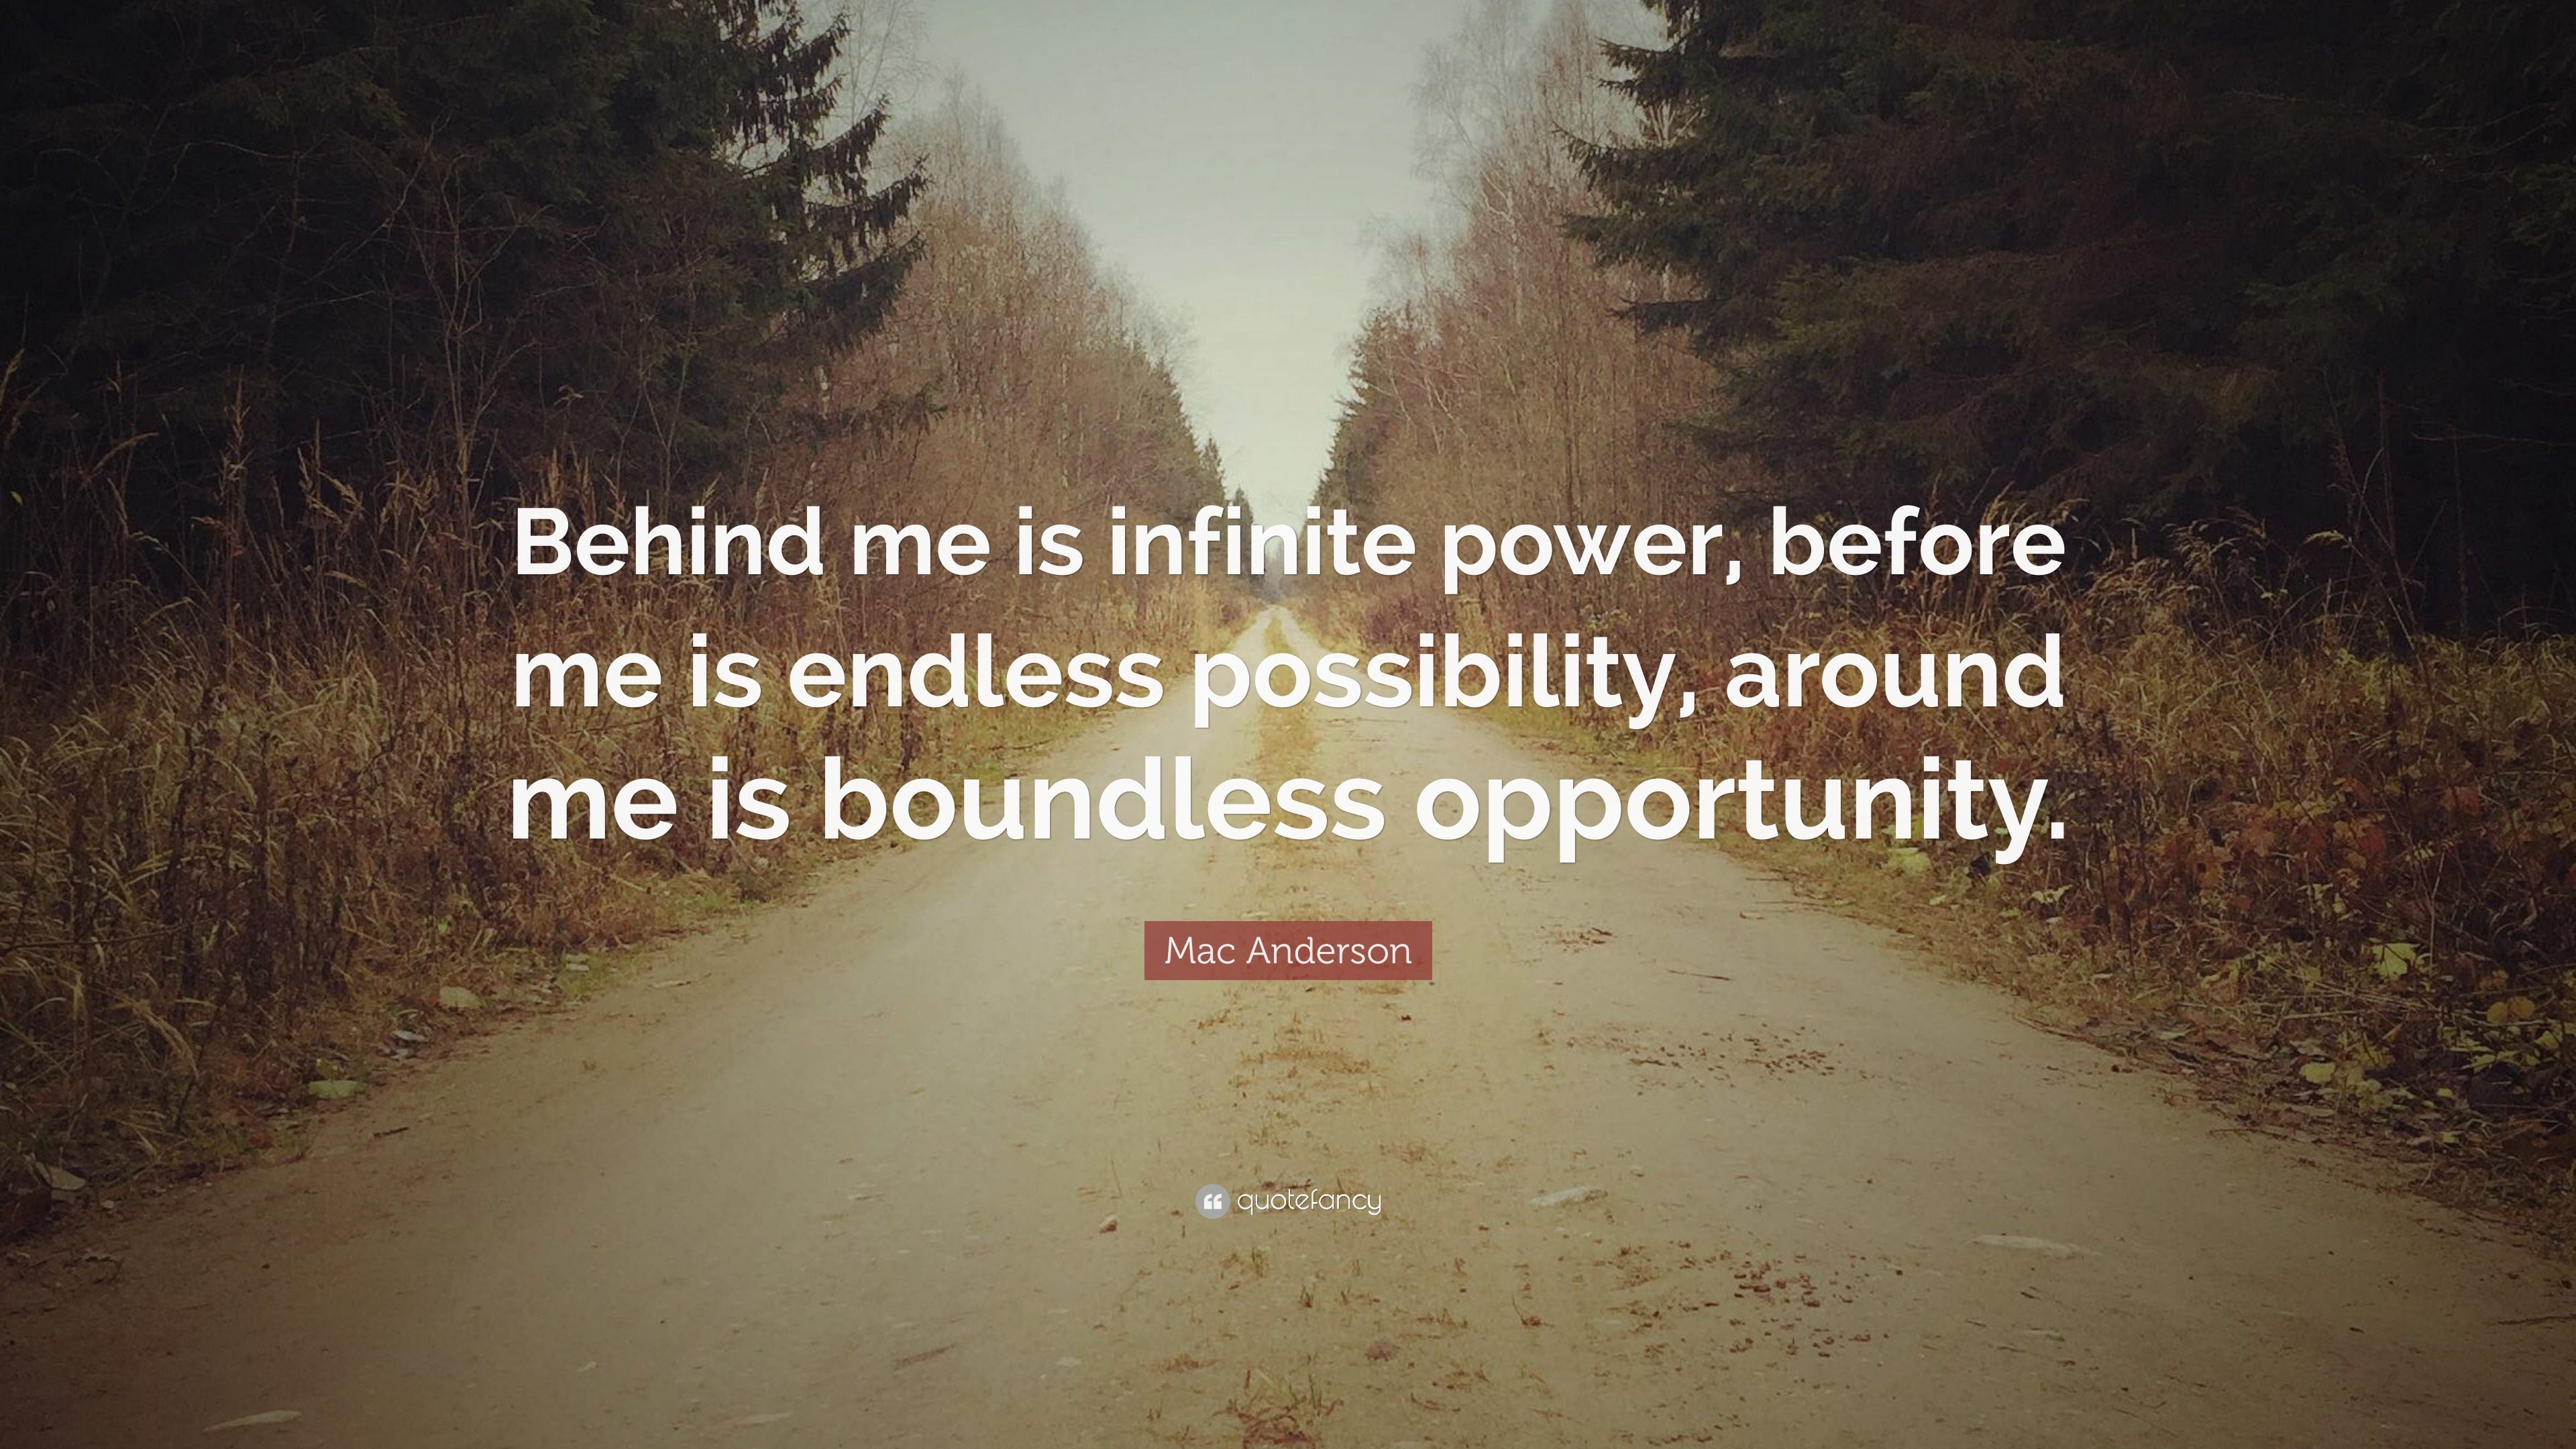 Mac Anderson Quote: “Behind me is infinite power, before me is endless ...